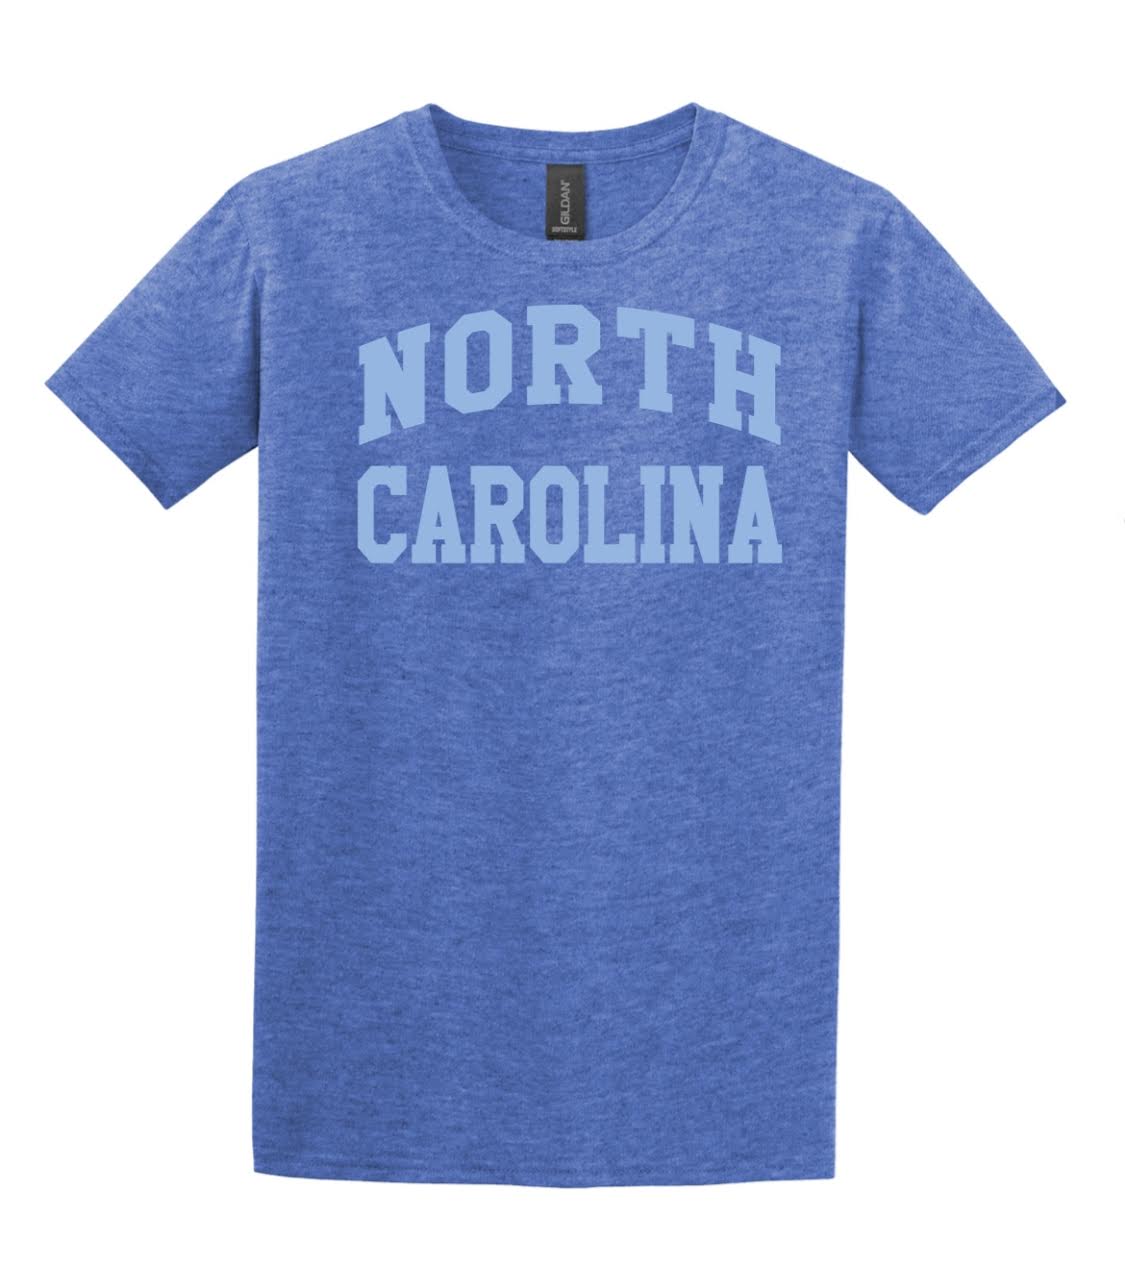 North Carolina T-shirt